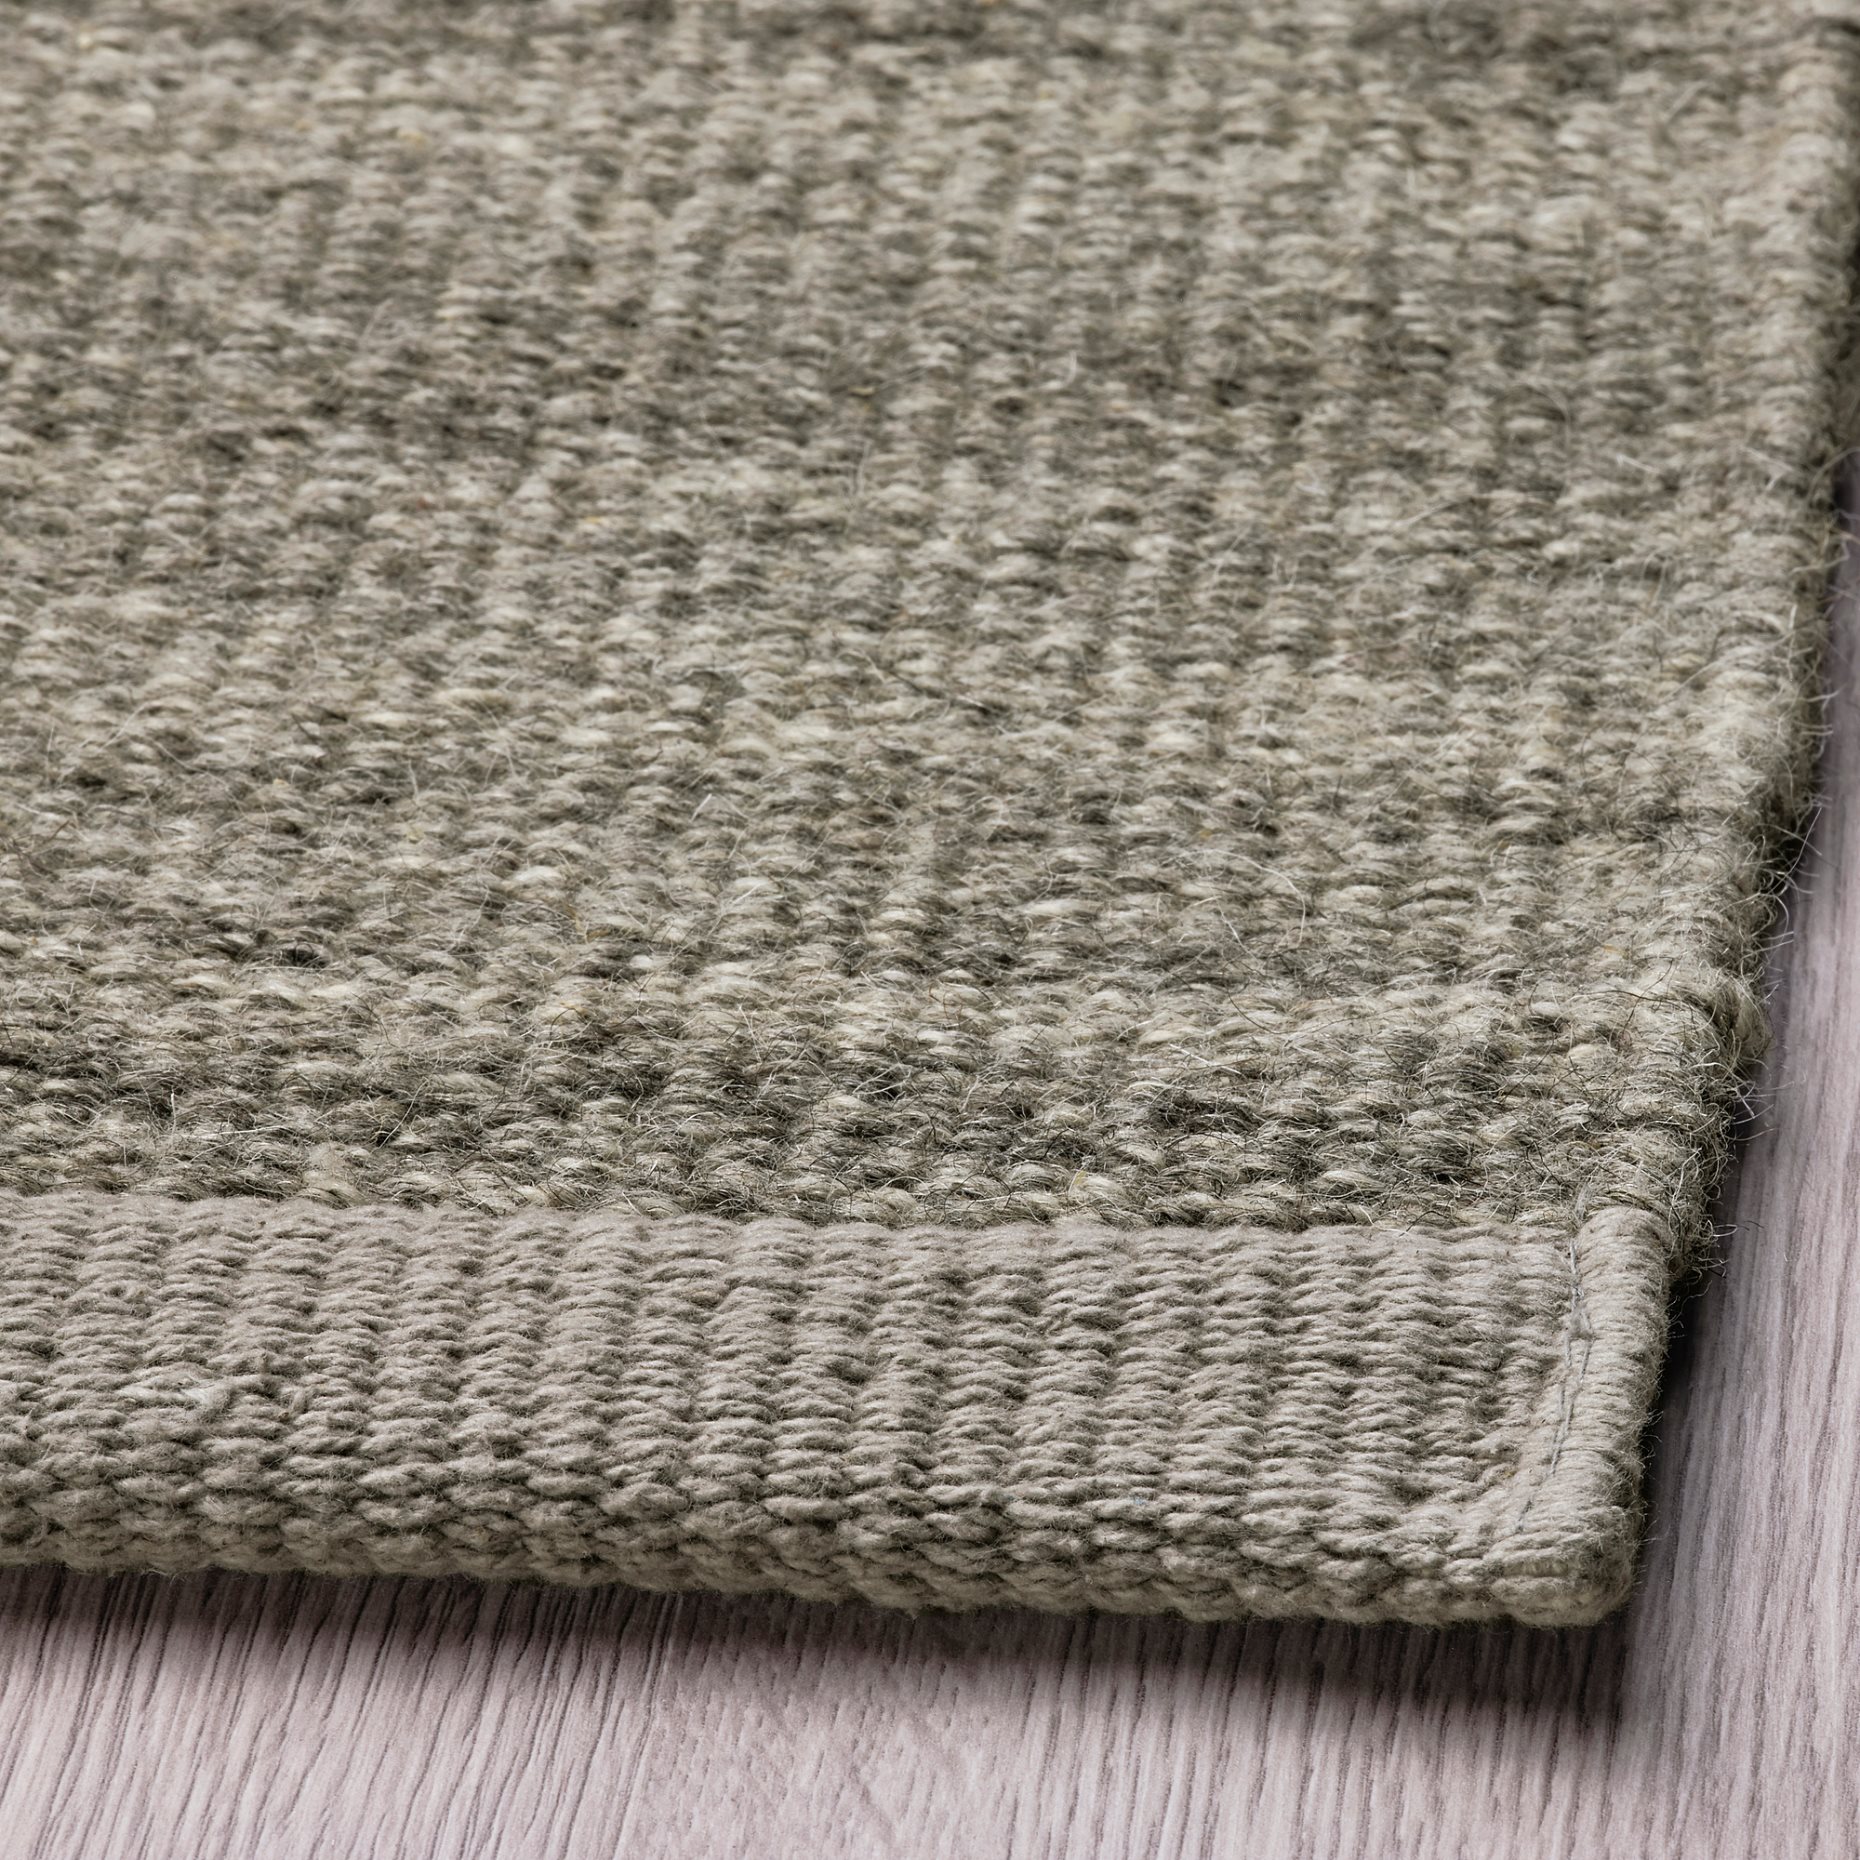 TIDTABELL, килим, гладко тъкан, 905.618.74